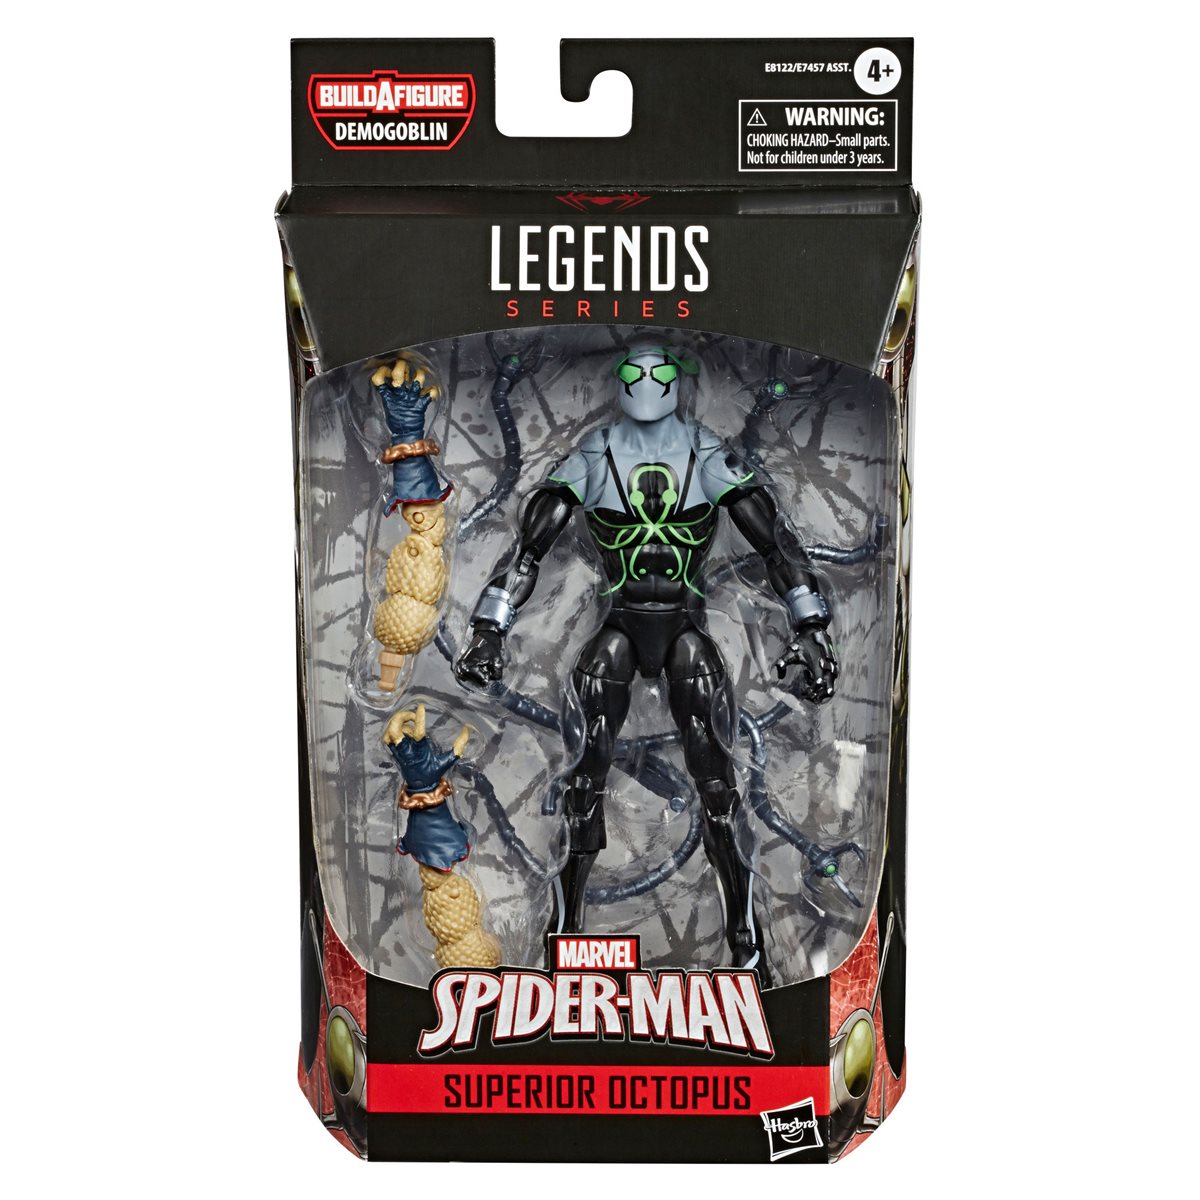 Hasbro Marvel Spider-Man Legends Series 6-Inch Demogoblin Spider-Man Collectible Figure for sale online 